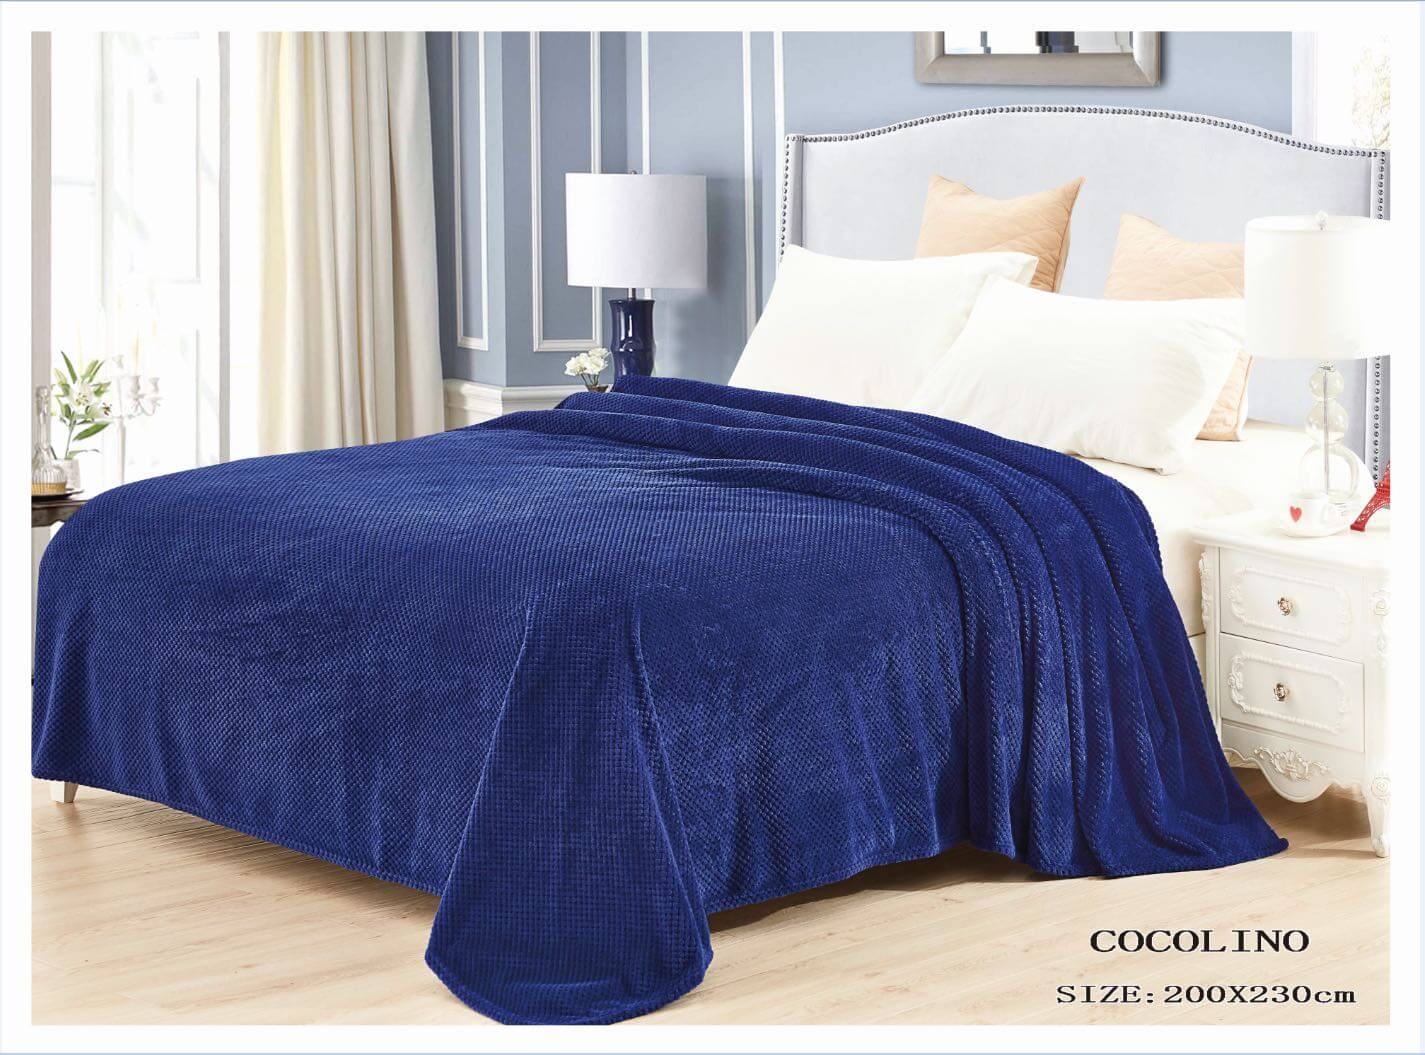 To contaminate freedom Lukewarm Patura Cocolino albastra - Bed Fashion